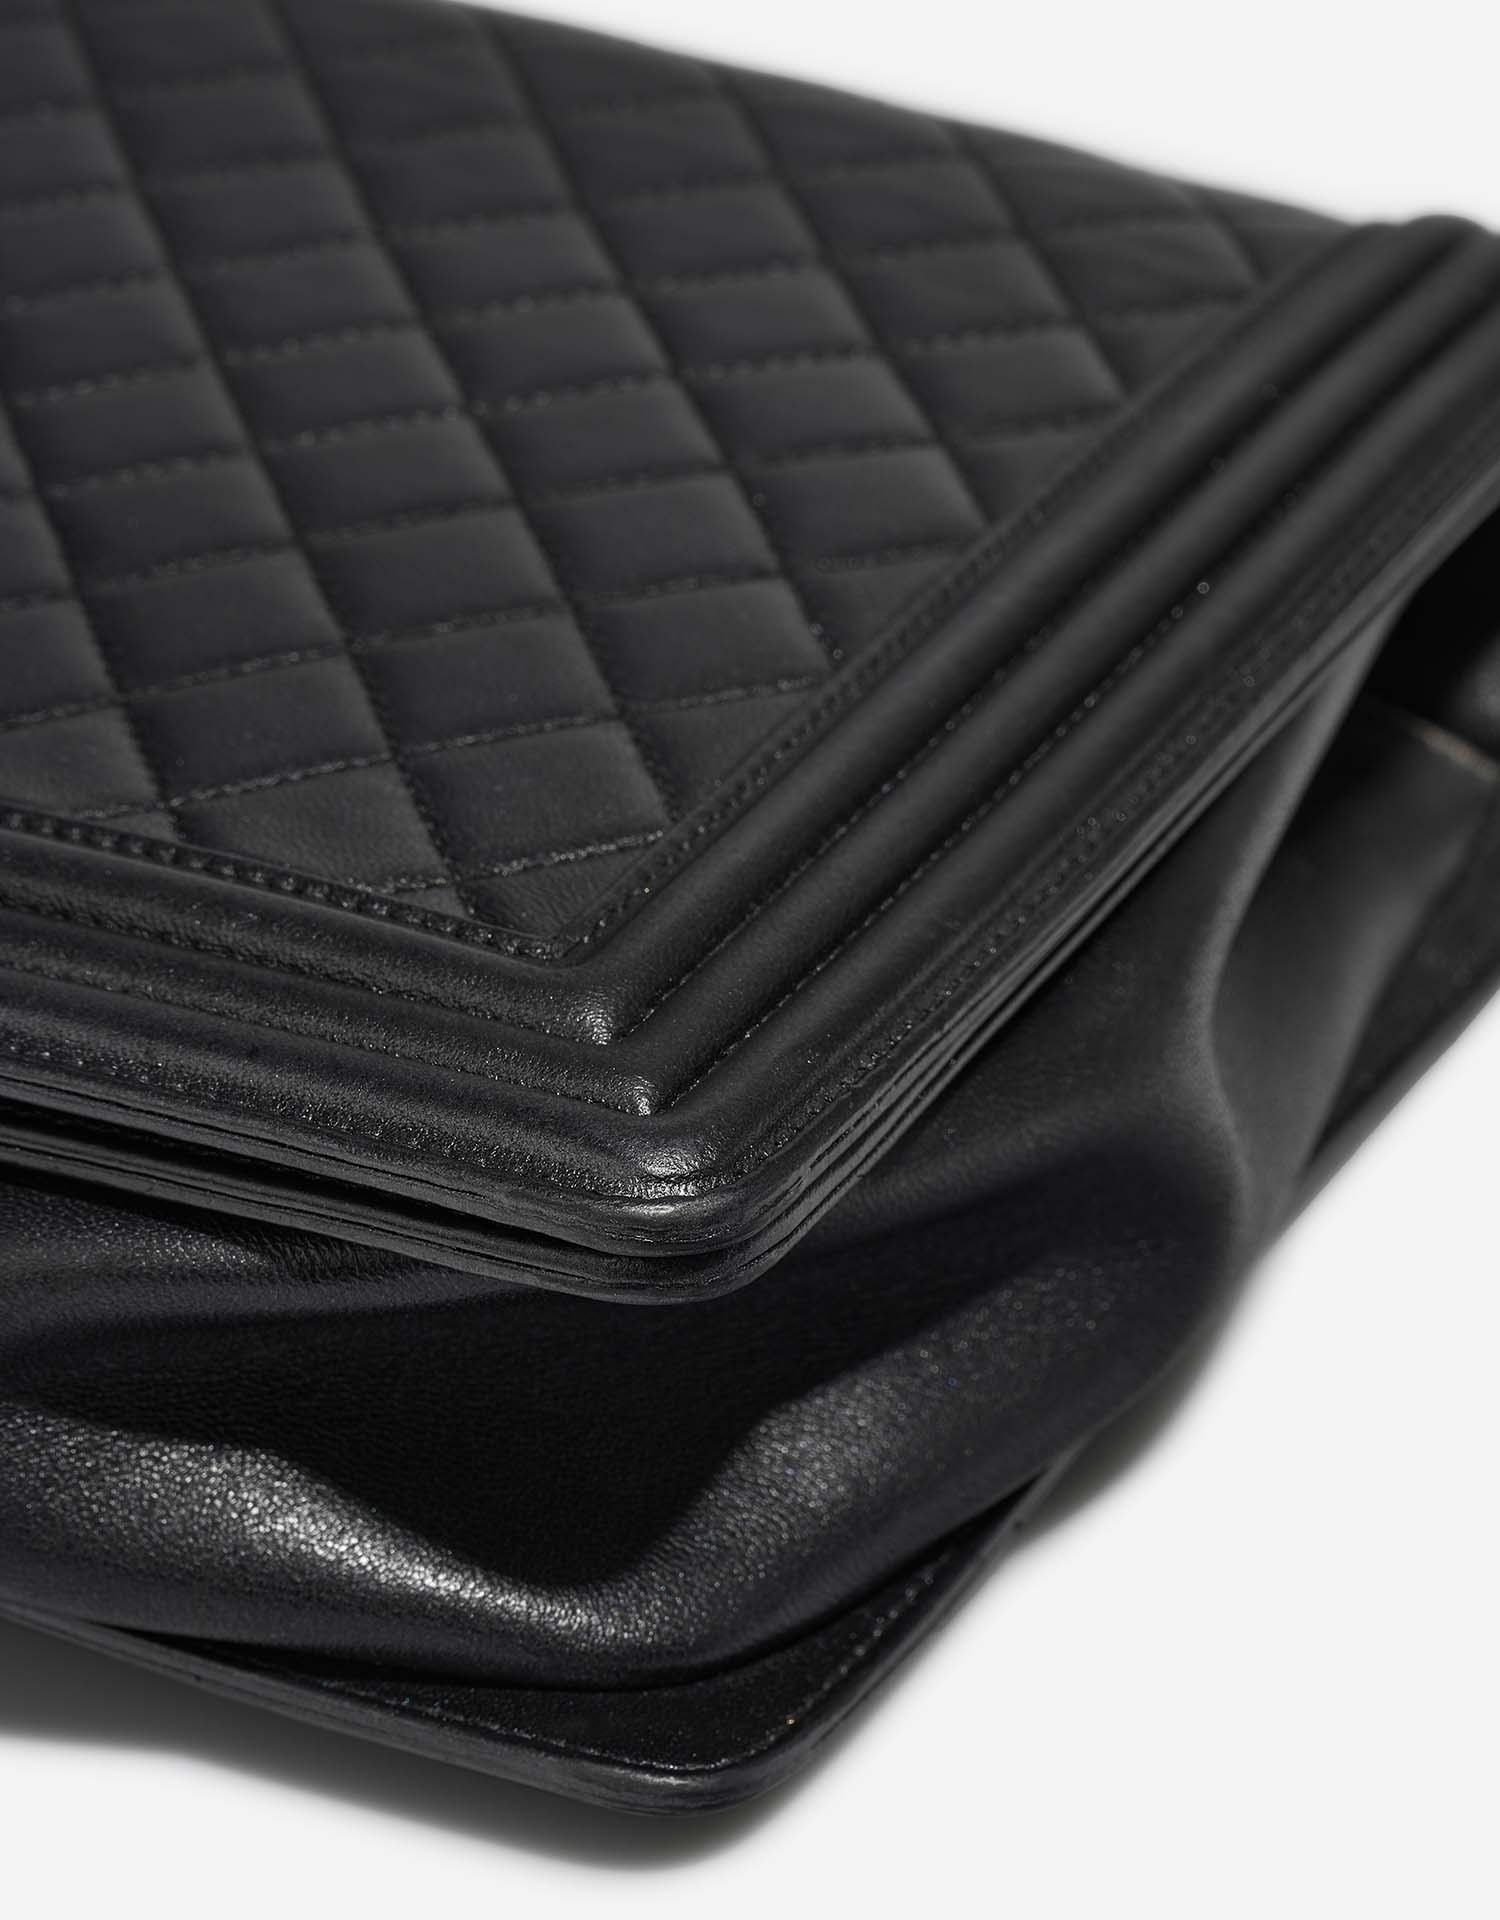 Chanel Boy Large Black signs of wear| Sell your designer bag on Saclab.com